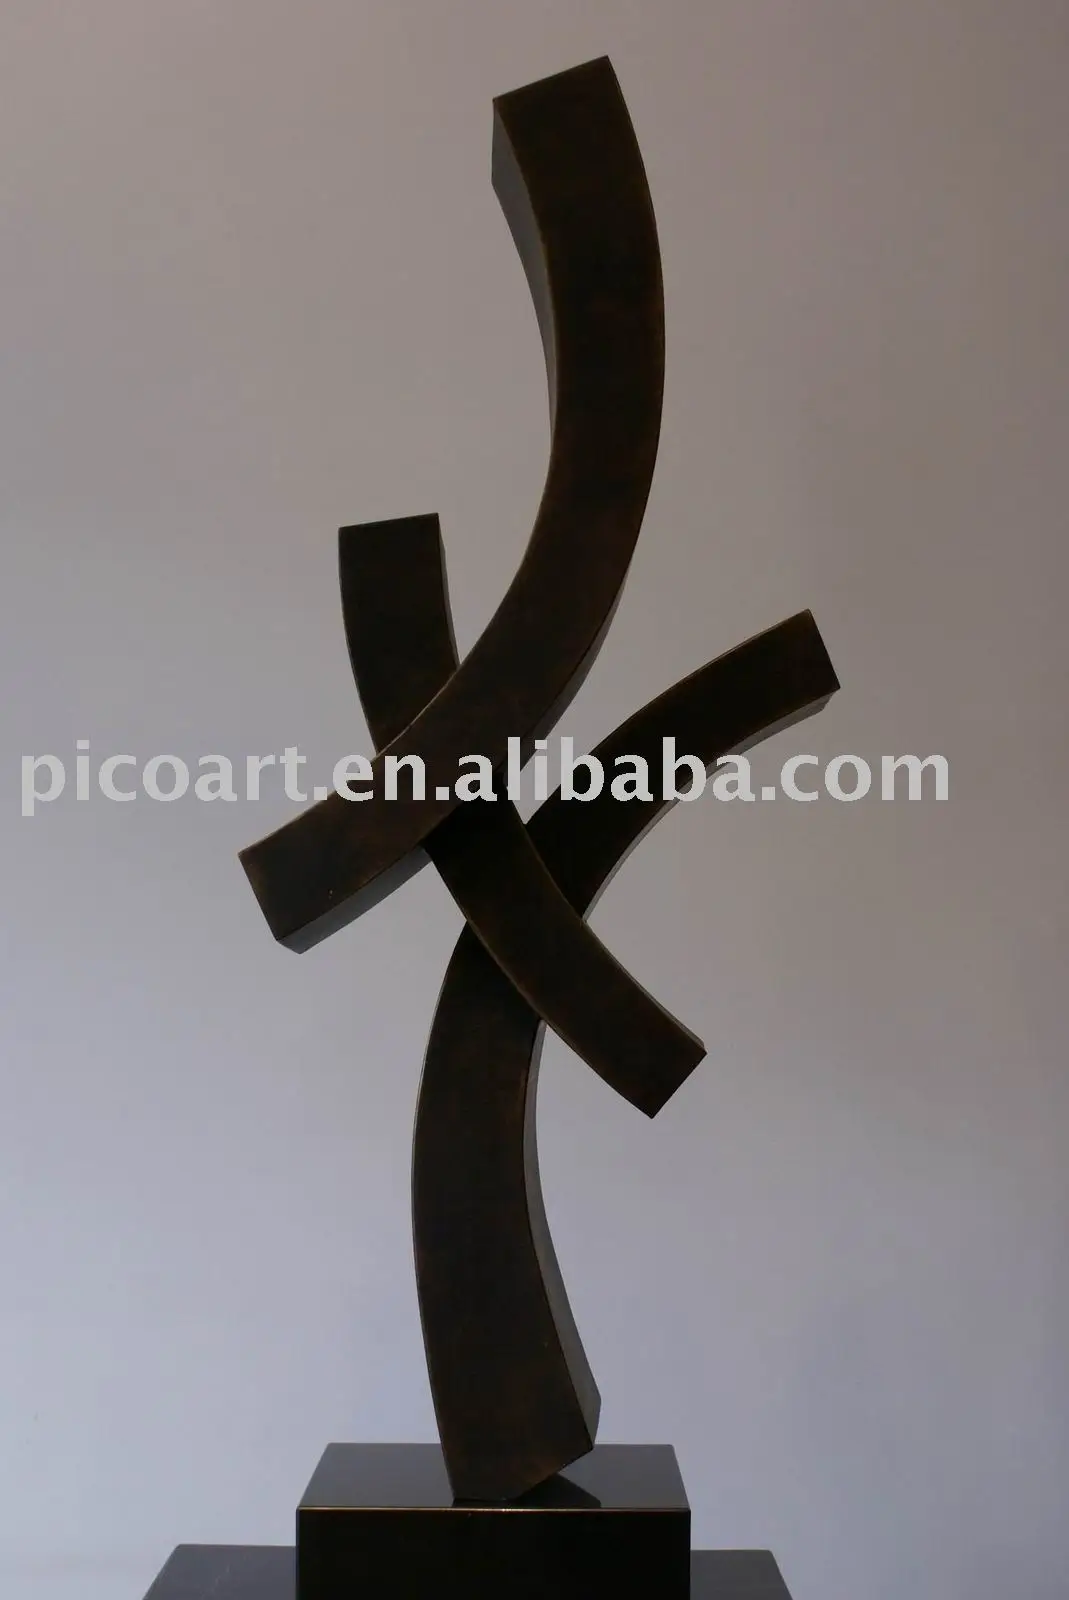 Antique Metal Abstract Sculpture Design Buy Abstract Sculpture Sculpture Design Sculpture Product On Alibaba Com